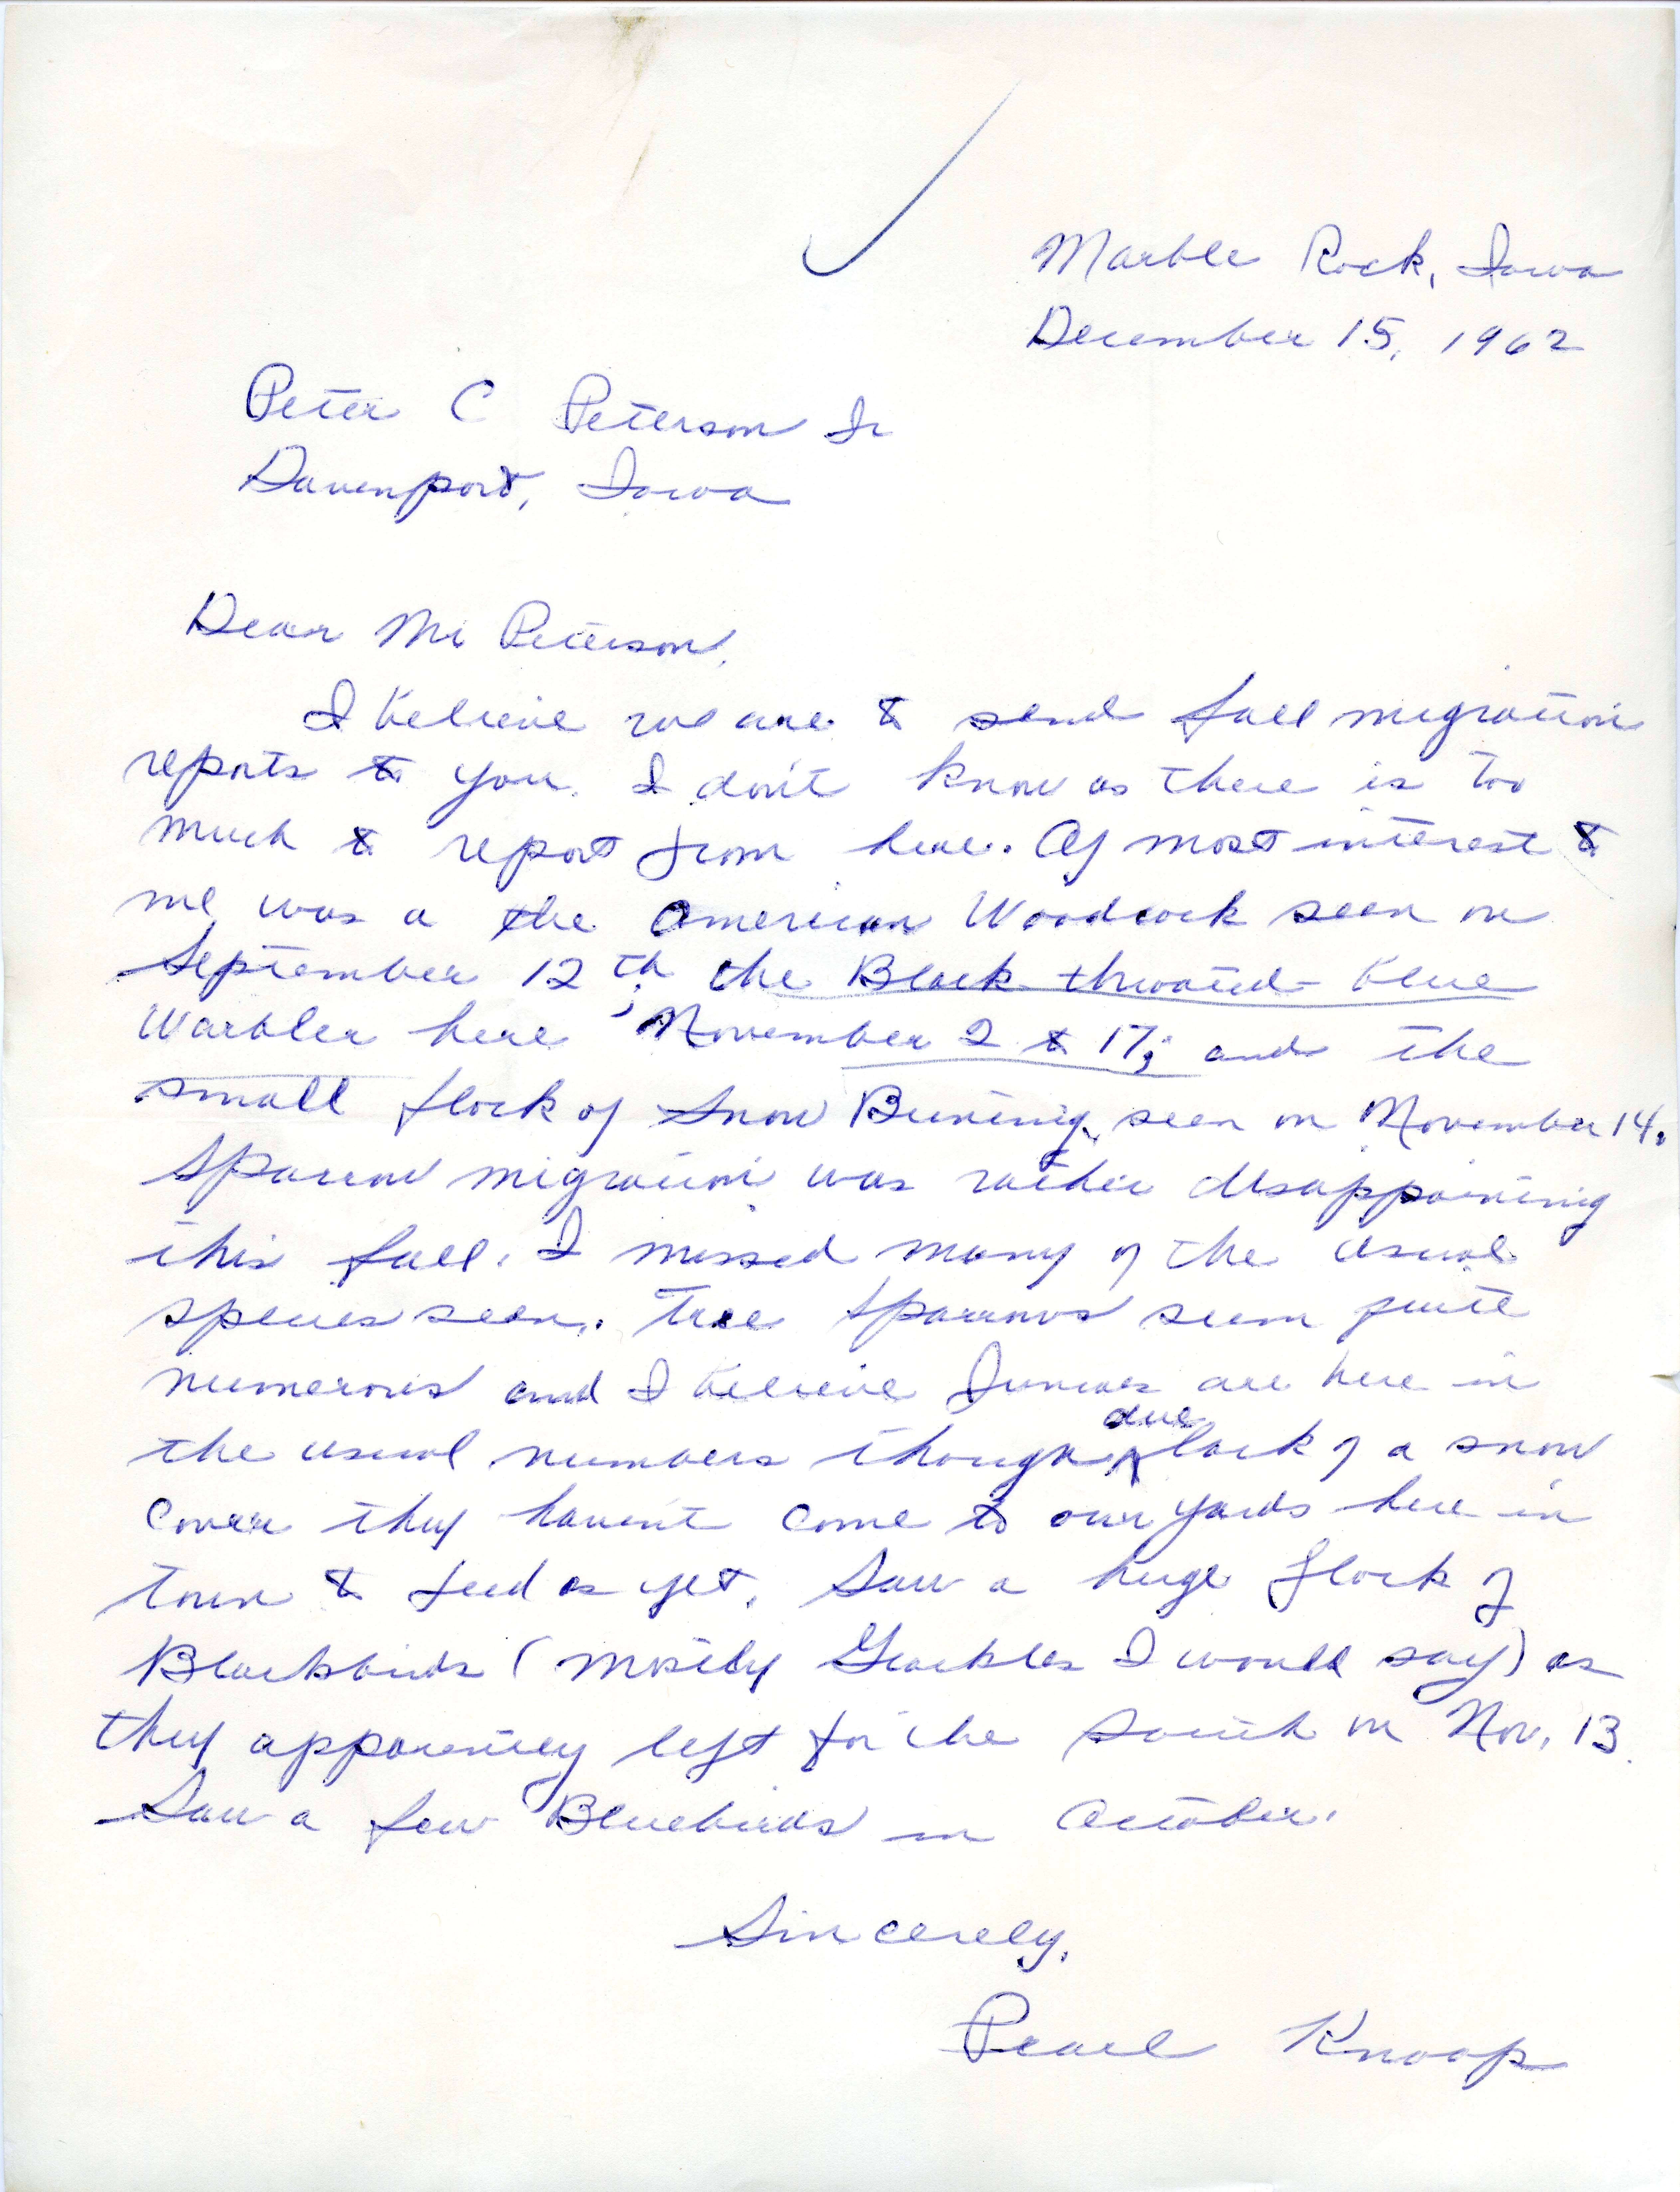 Pearl Knoop letter to Peter C. Petersen regarding fall migration, December 15, 1962 